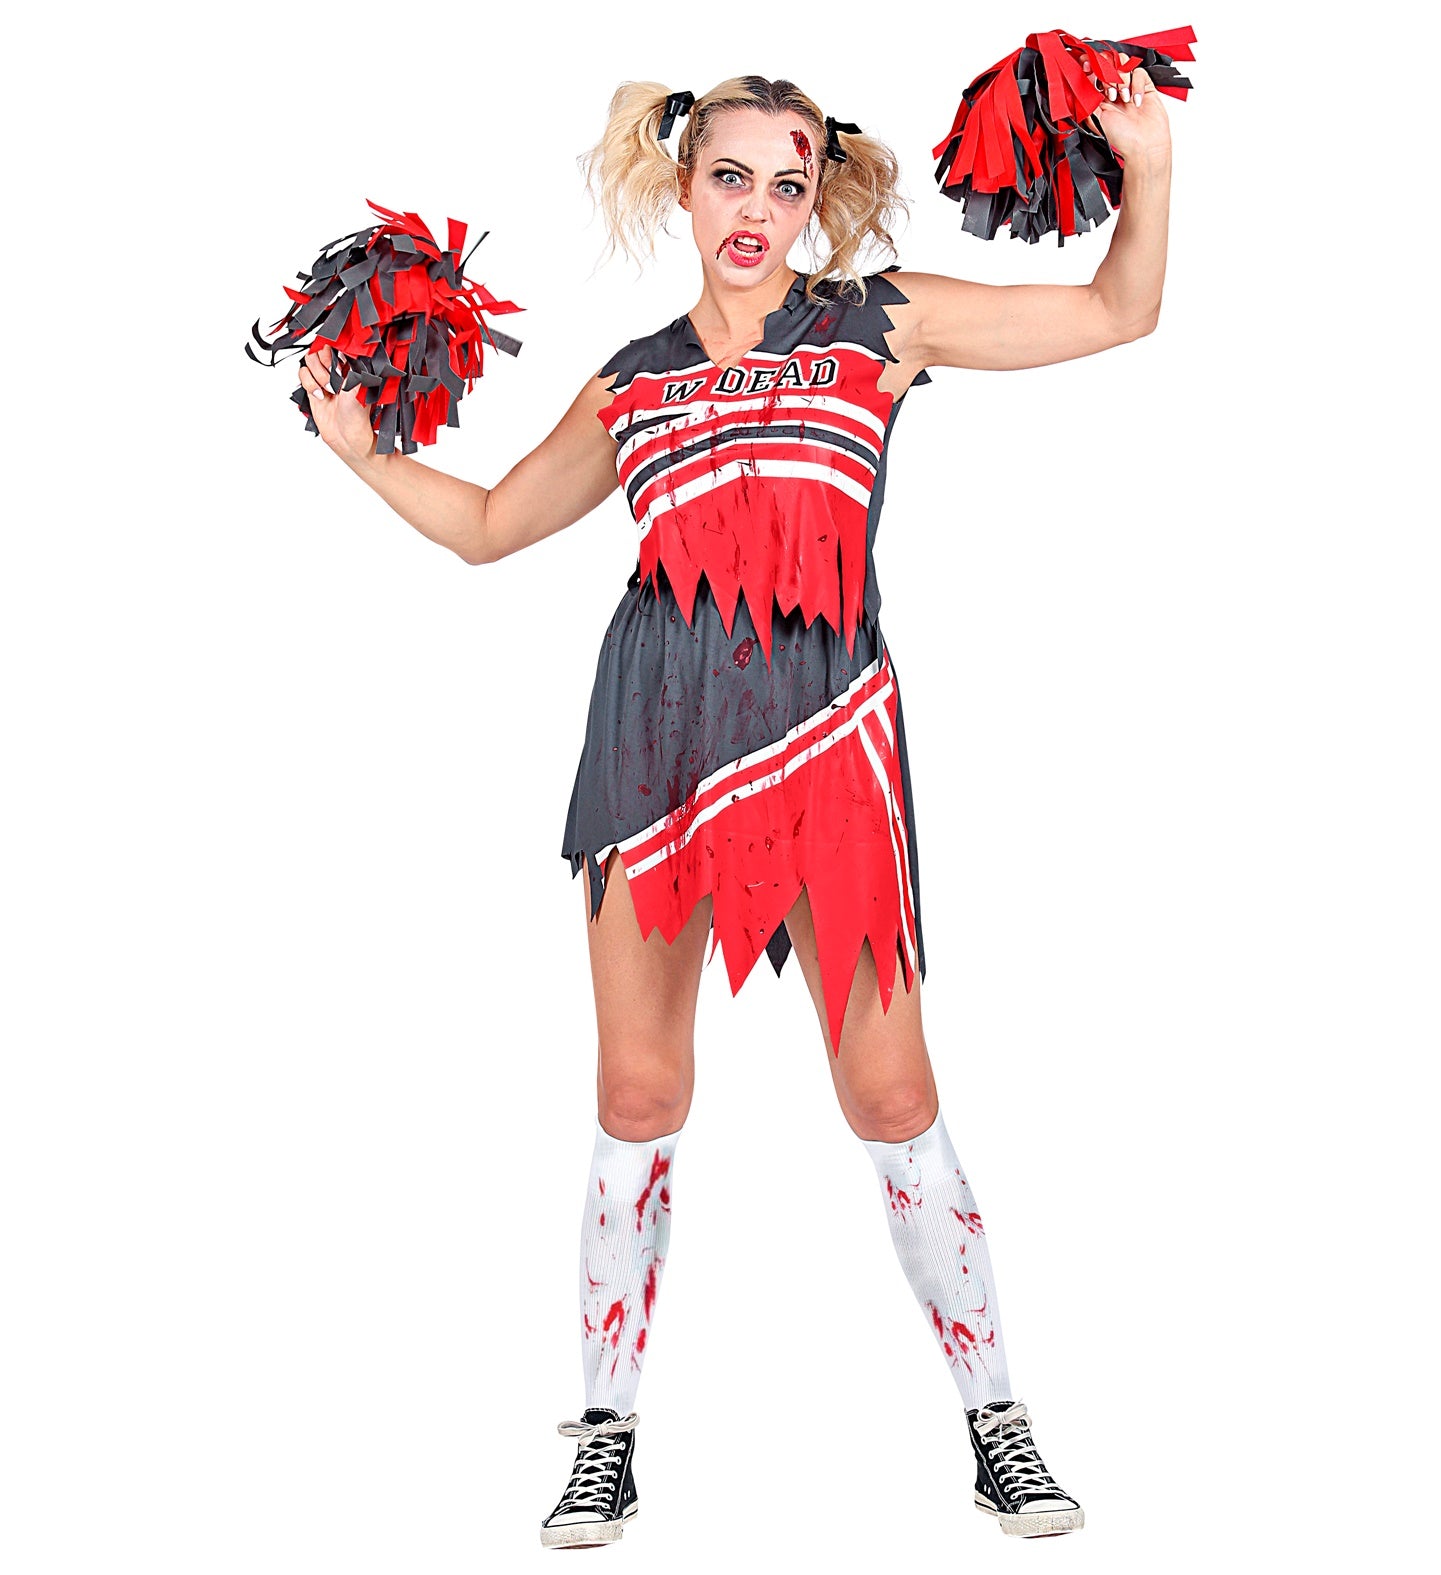 Alyweatry Cheerleader Costume Sexy Fantaisie Robe Liban